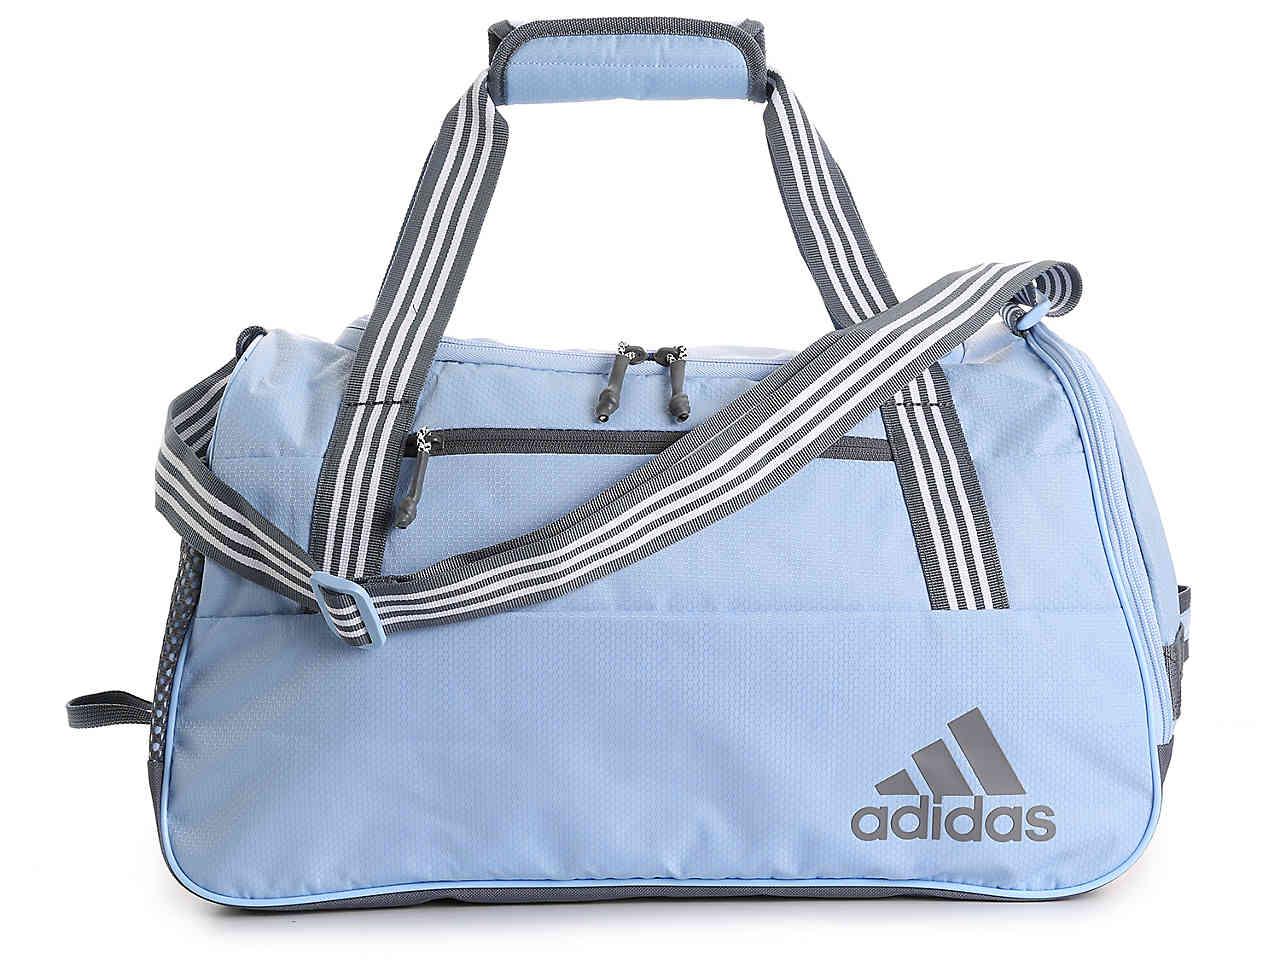 adidas Synthetic Squad Iv Gym Bag in Light Blue/Grey (Blue) - Lyst